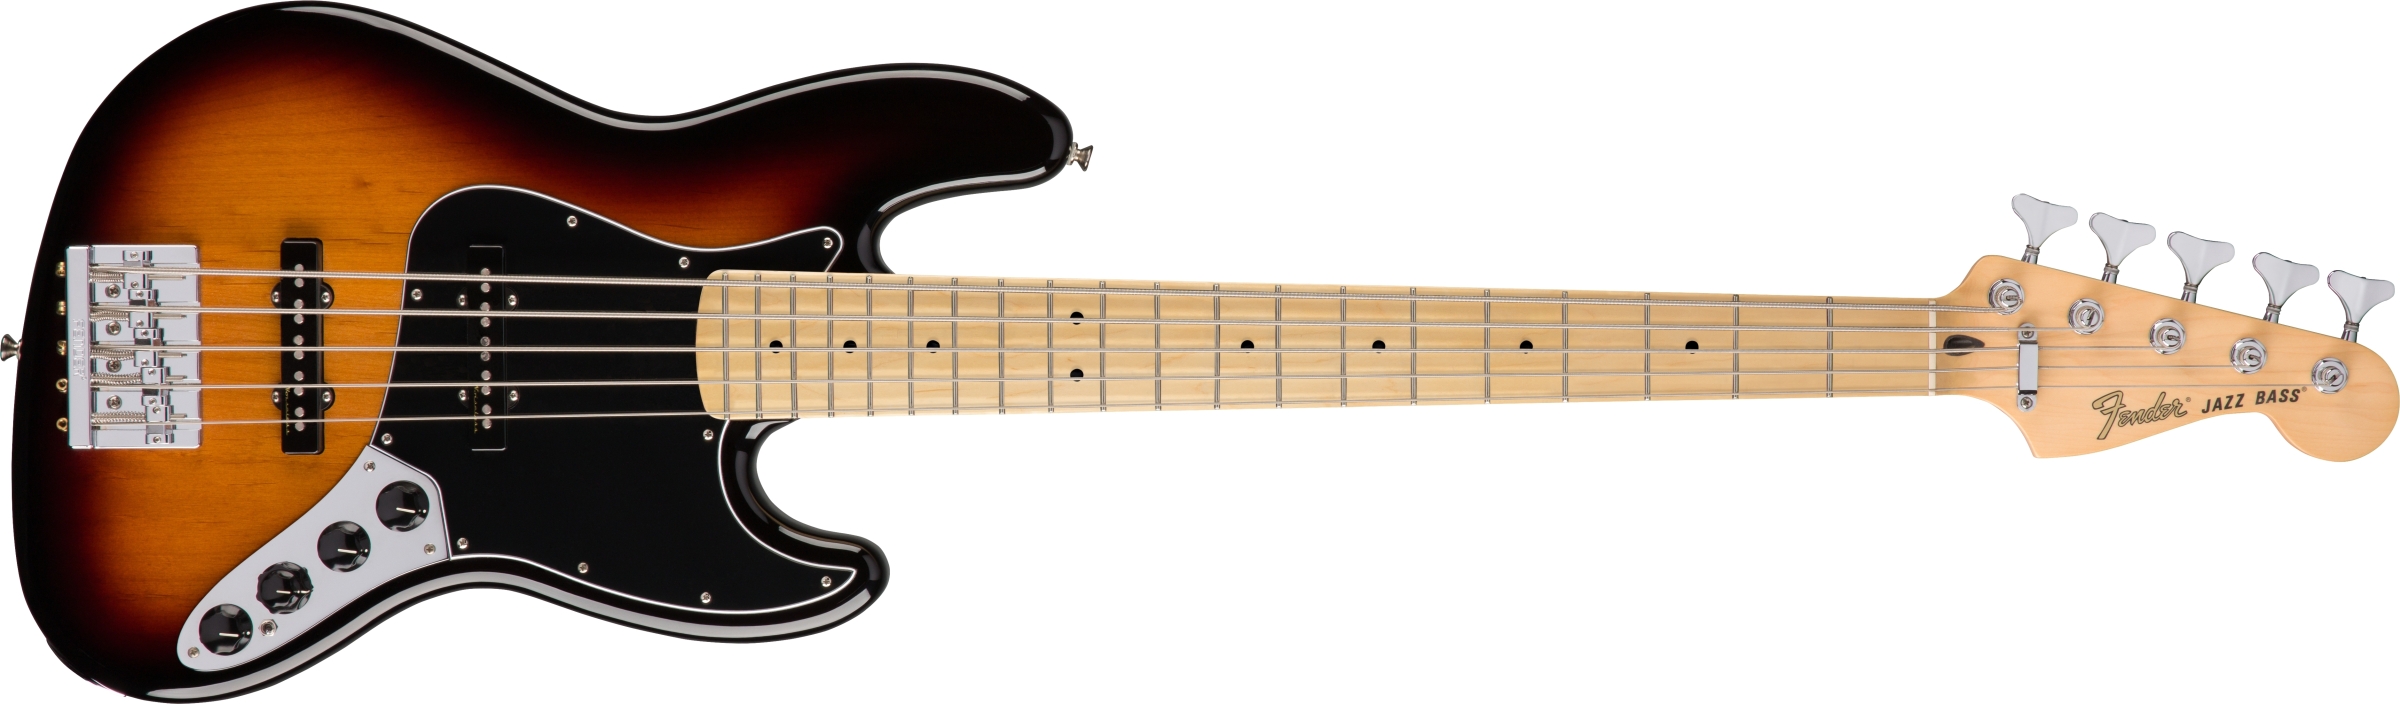 Fender Jaguar Bass Wiring Diagram from cdn.statically.io